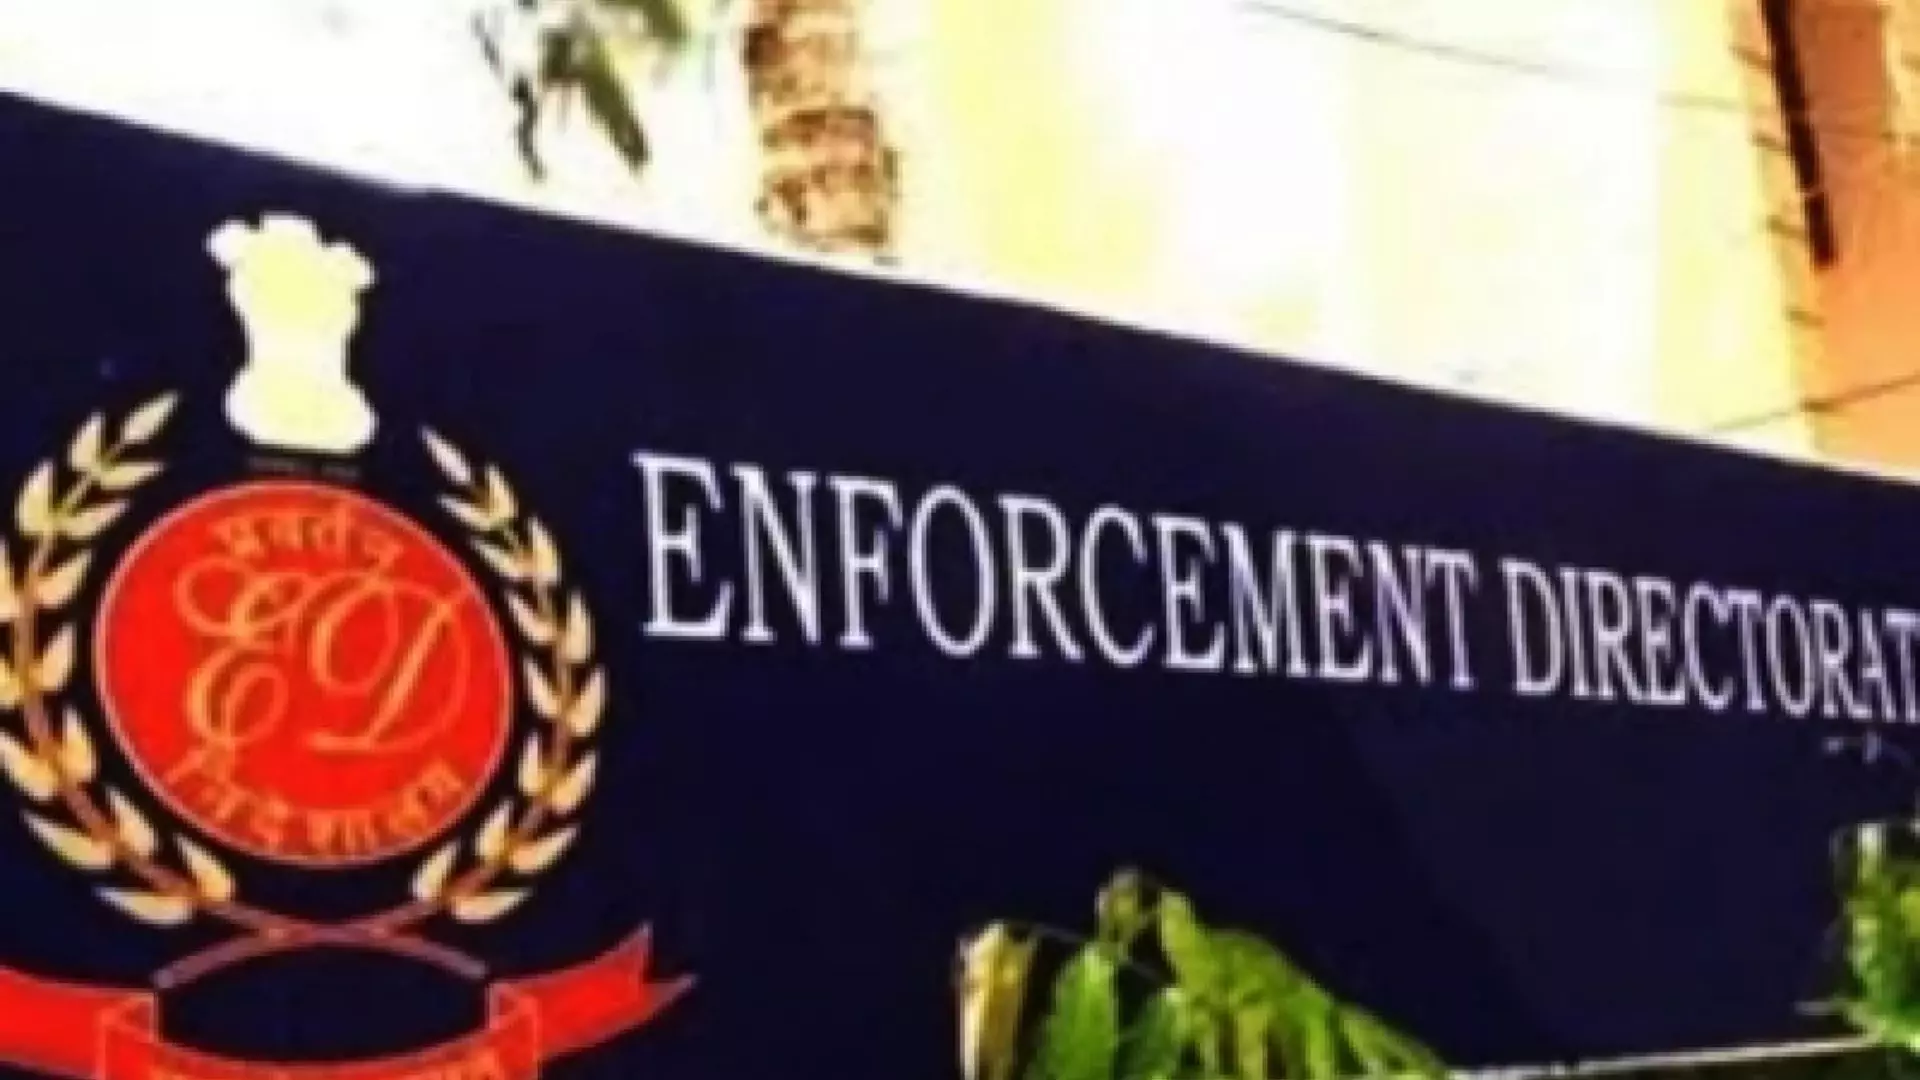 Enforcement Directorate Focus is on Drug Transactions